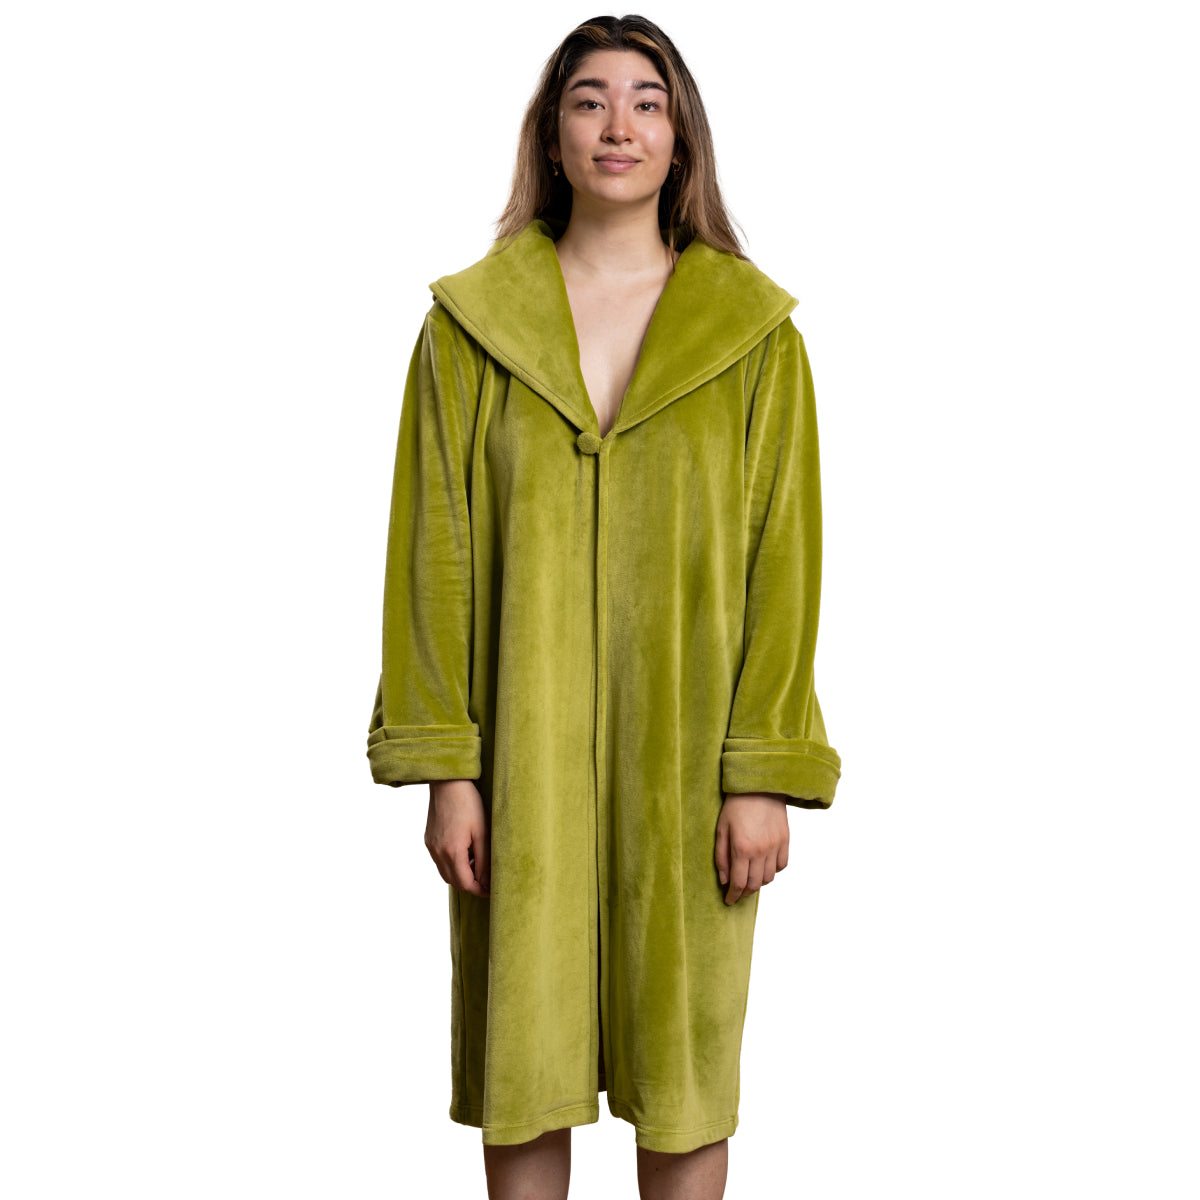 Maude Lewbowski Long Olive Green Robe Costume Full